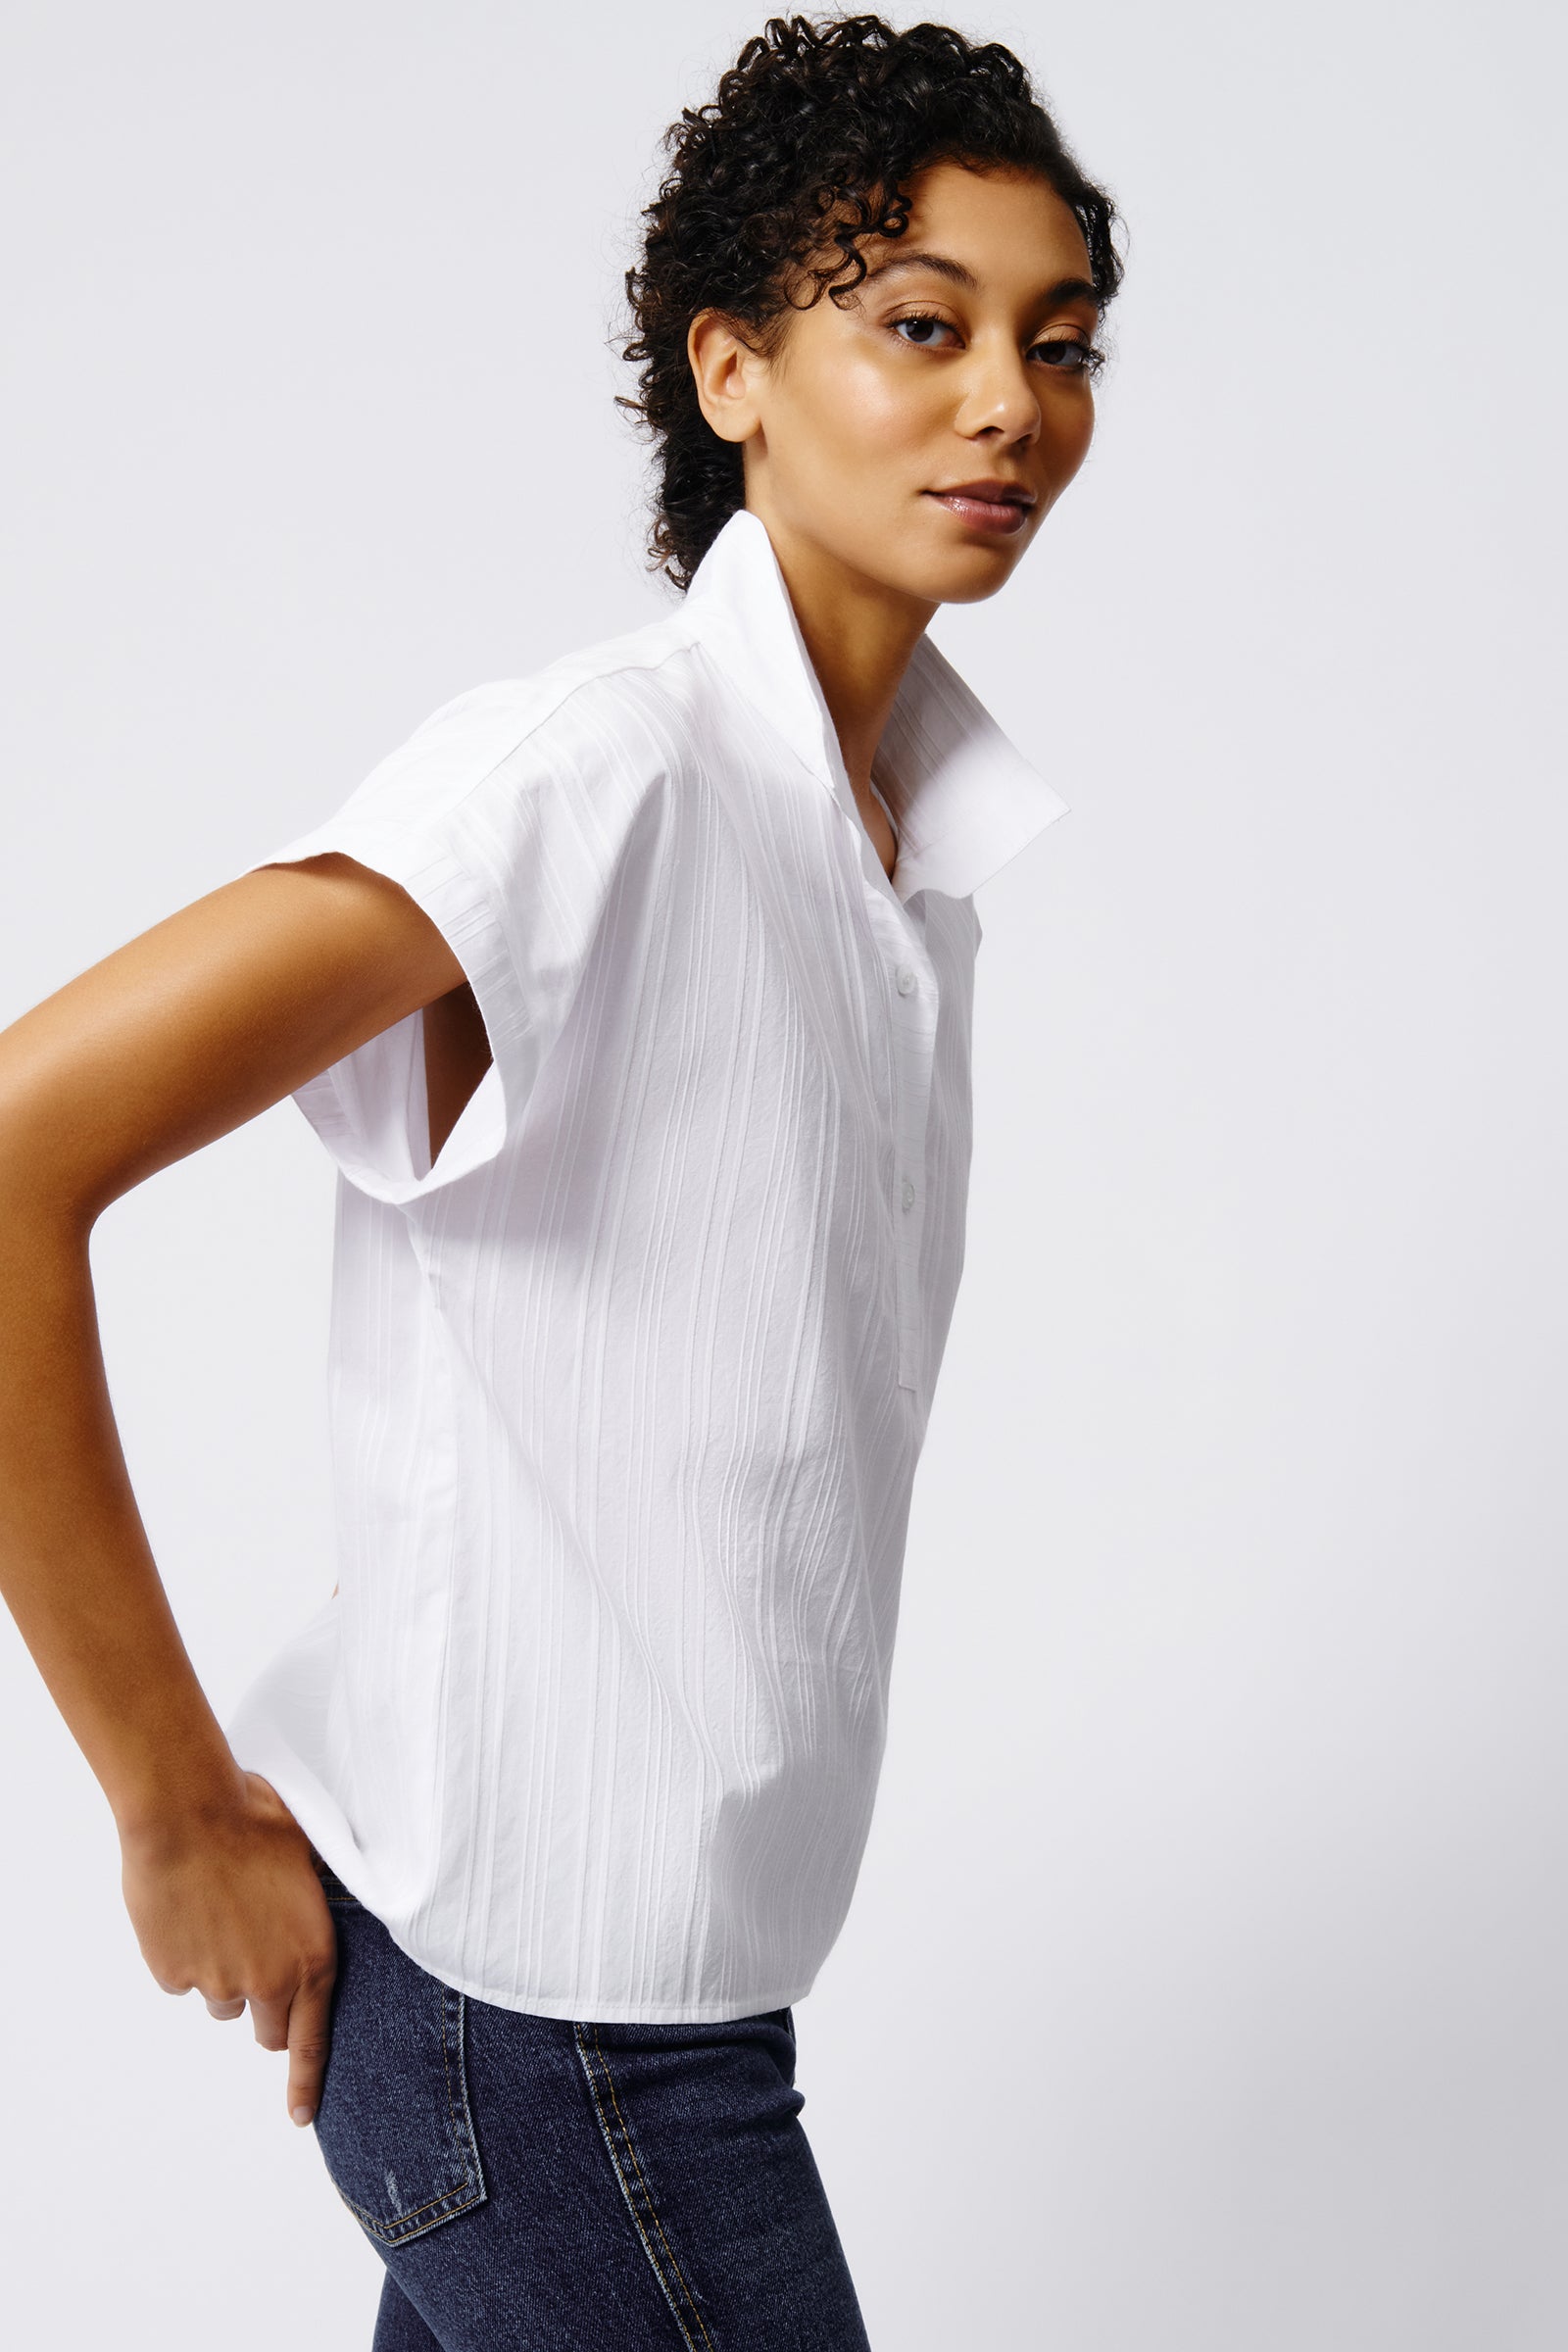 Kal Rieman Cabana Shirt in White Stripe on Model Side View Crop